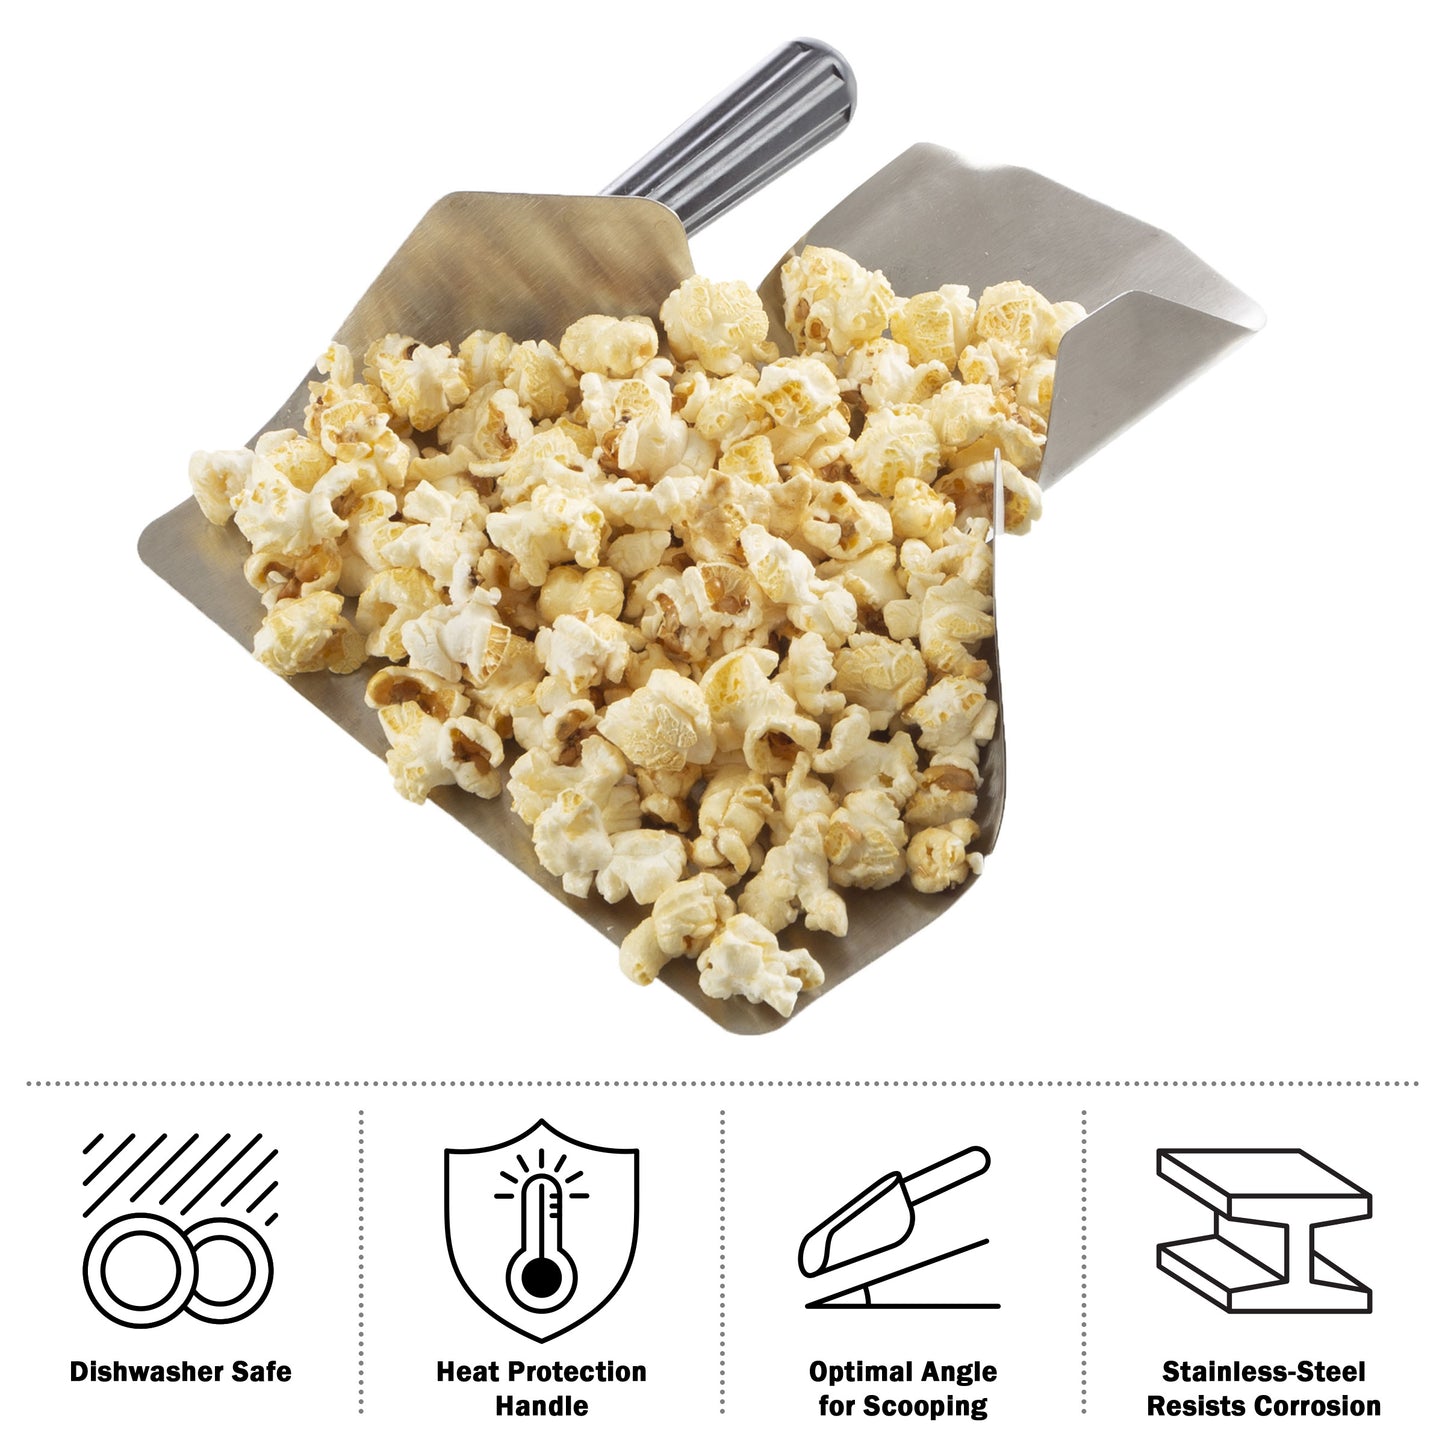 Popcorn Dredge and Seasoning Shaker Set